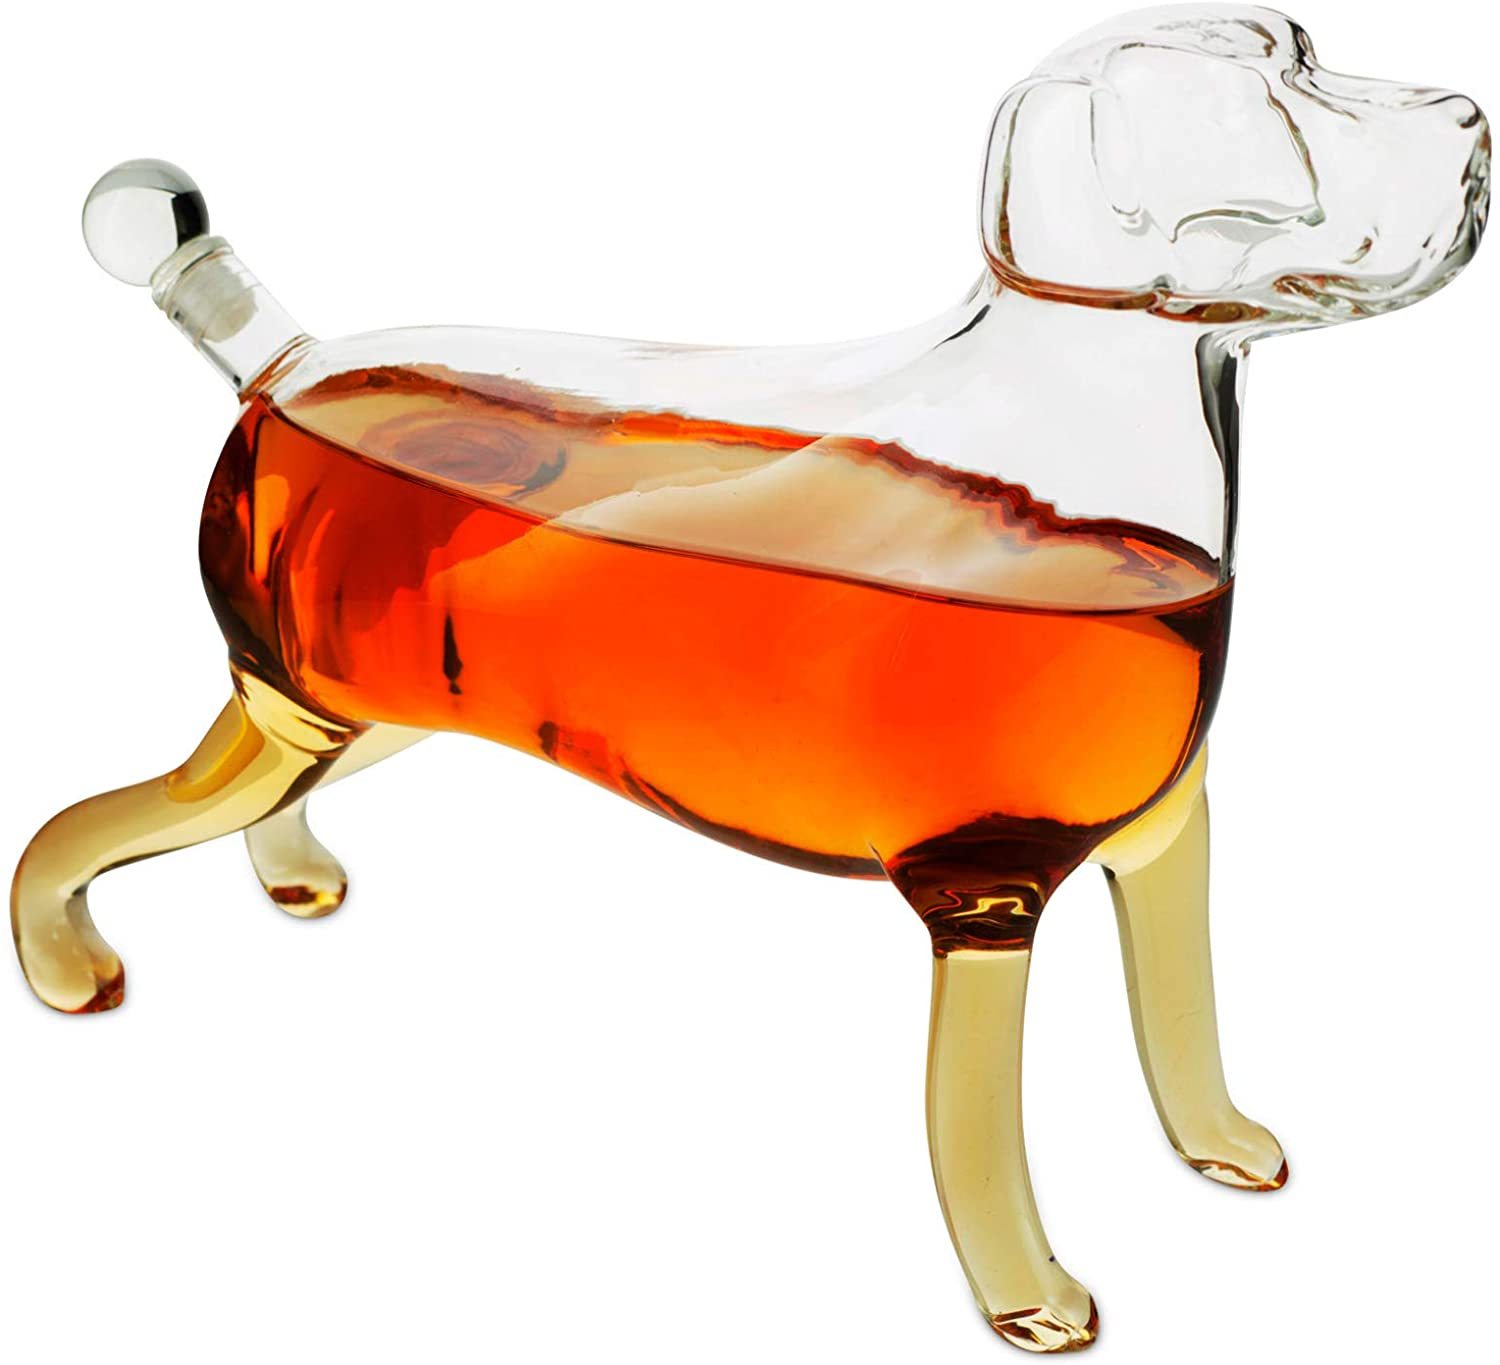 A Labrador dog shaped whiskey decanter